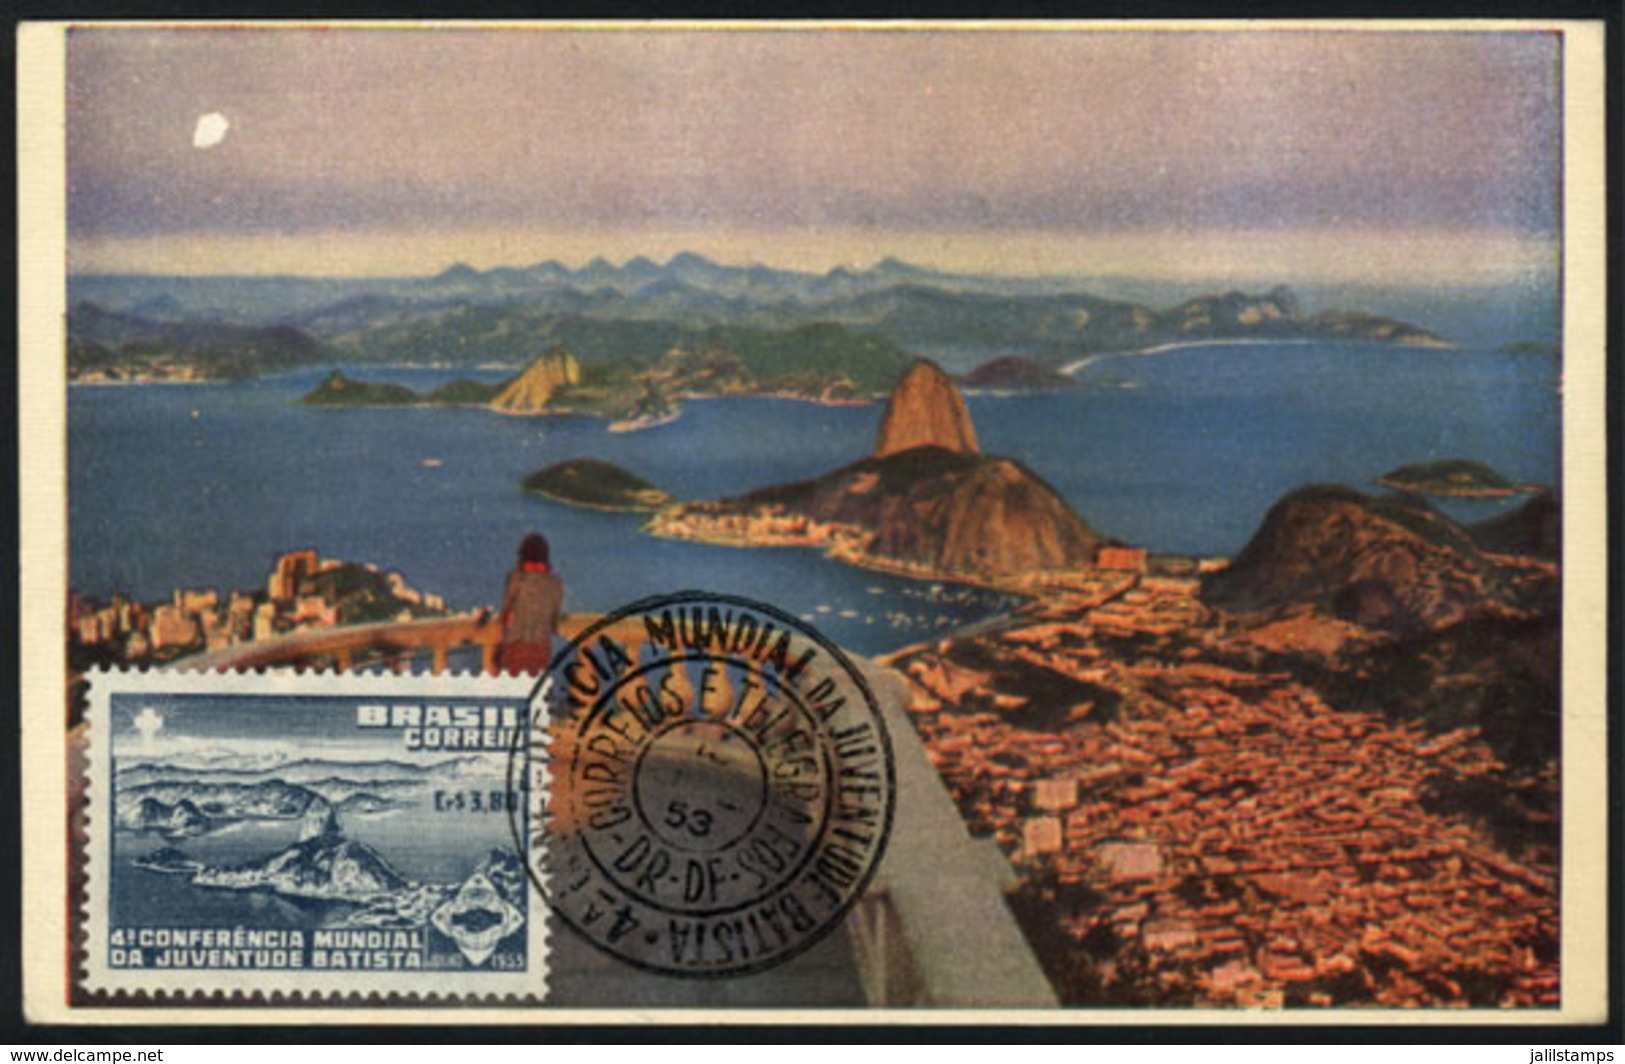 889 BRAZIL: RIO DE JANEIRO General View, Maximum Card Of 1953, With Special Pmk 'Conferencia Juventude Batista', VF Qual - Maximum Cards